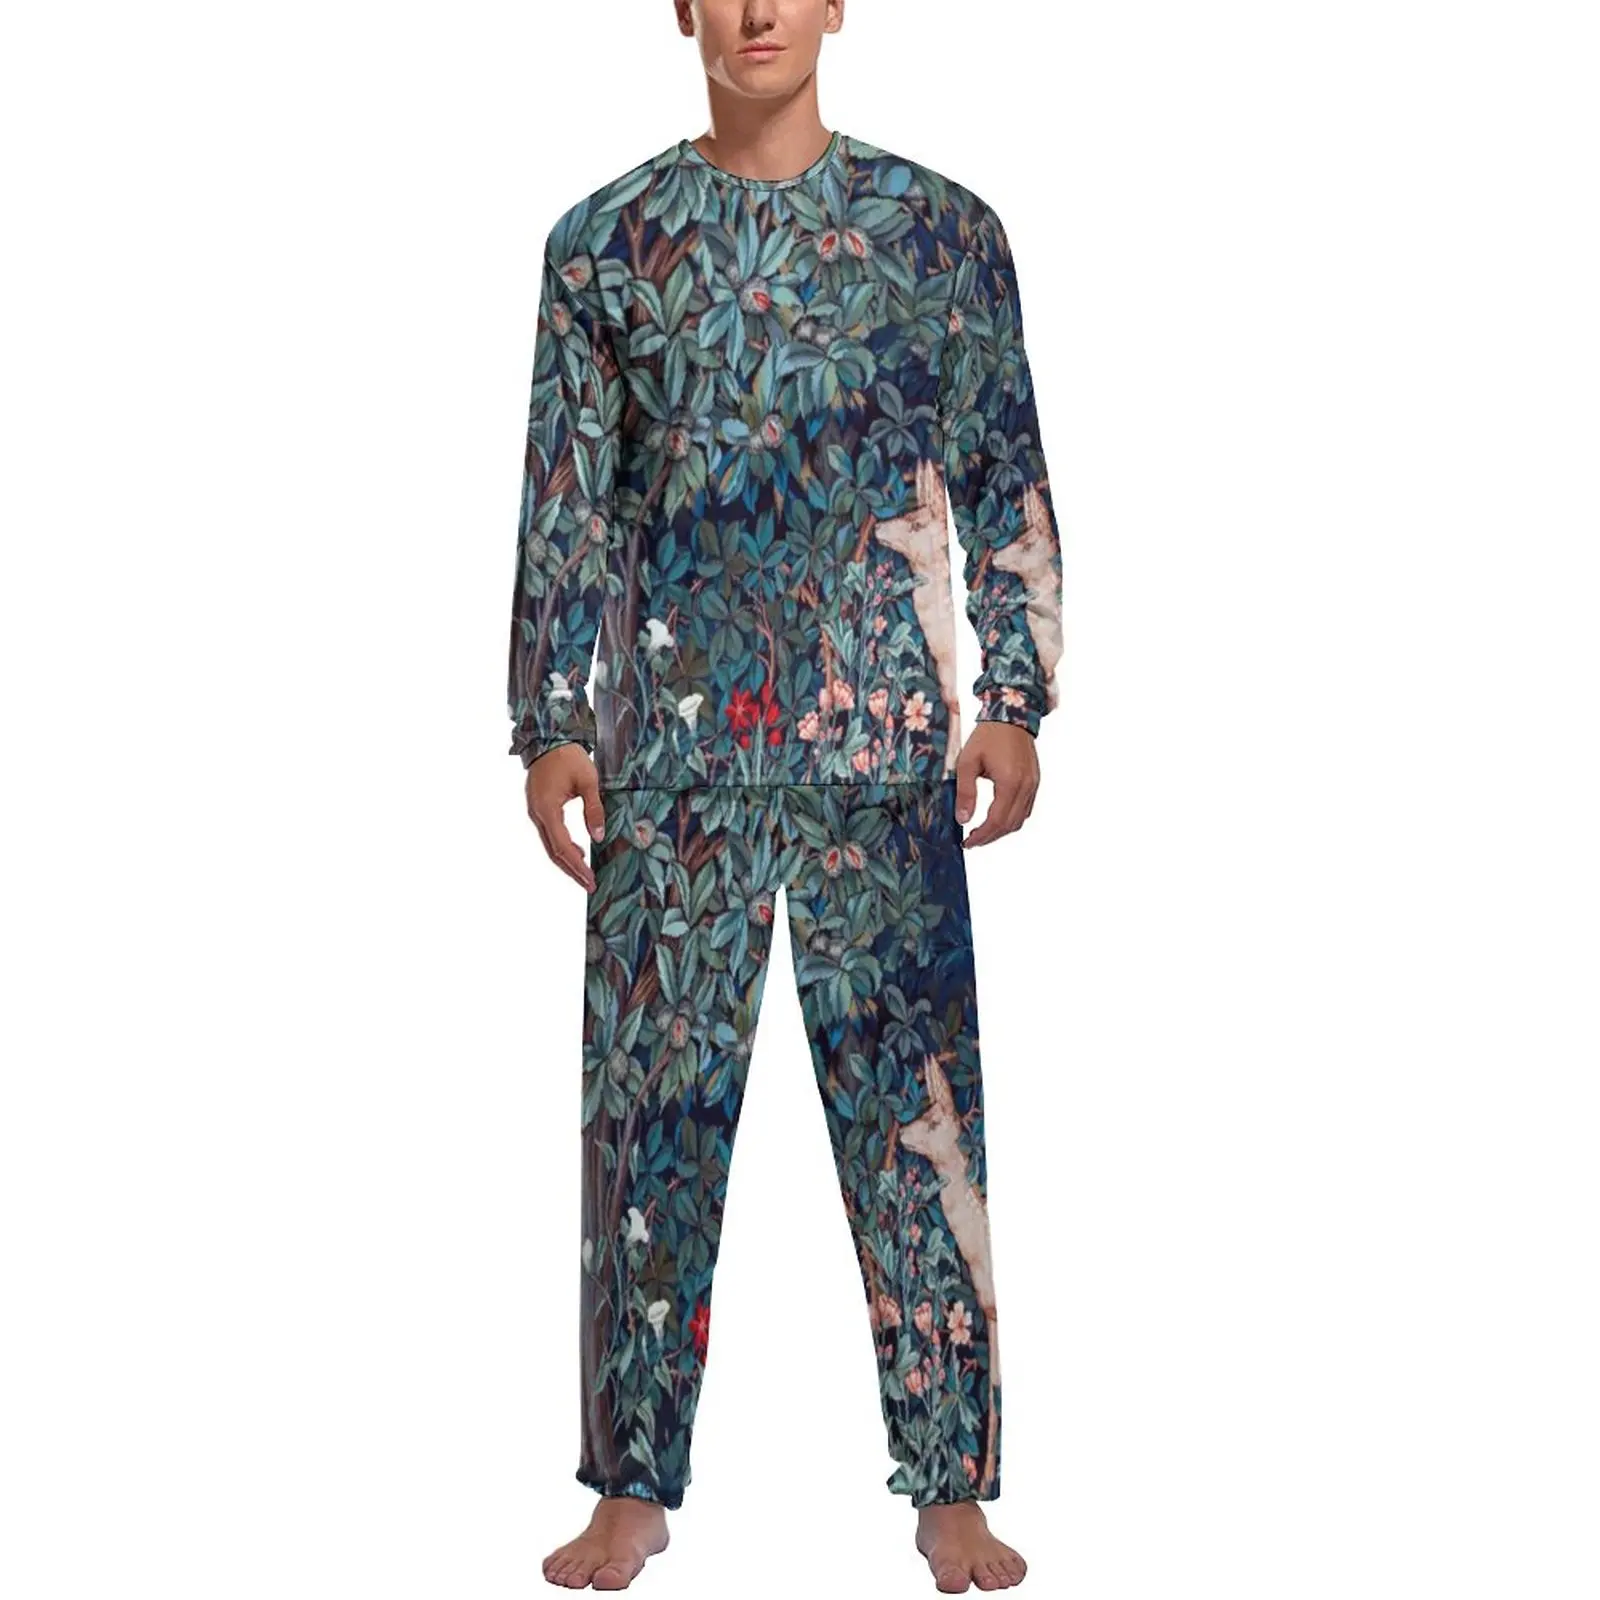 Nature Forest Pajamas Long Sleeves Animal Print 2 Piece Casual Pajama Sets Winter Man Design Cute Sleepwear